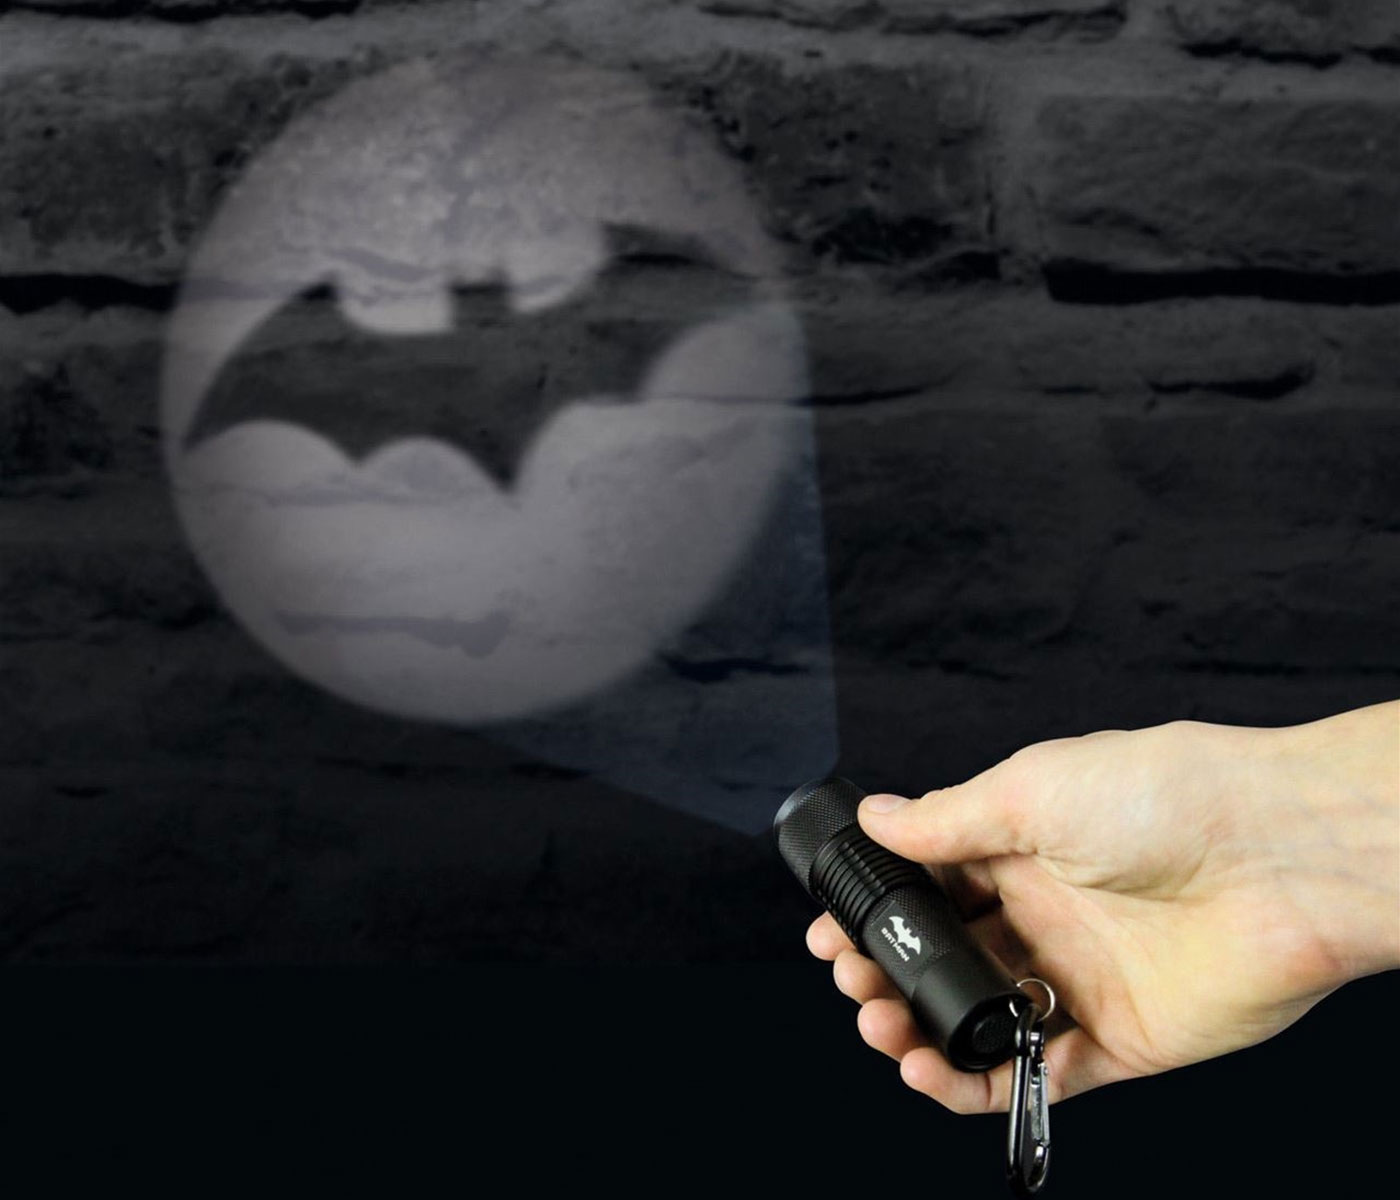 https://www.geekalerts.com/u/Batman-Bat-Signal-Projection-Flashlight.jpg